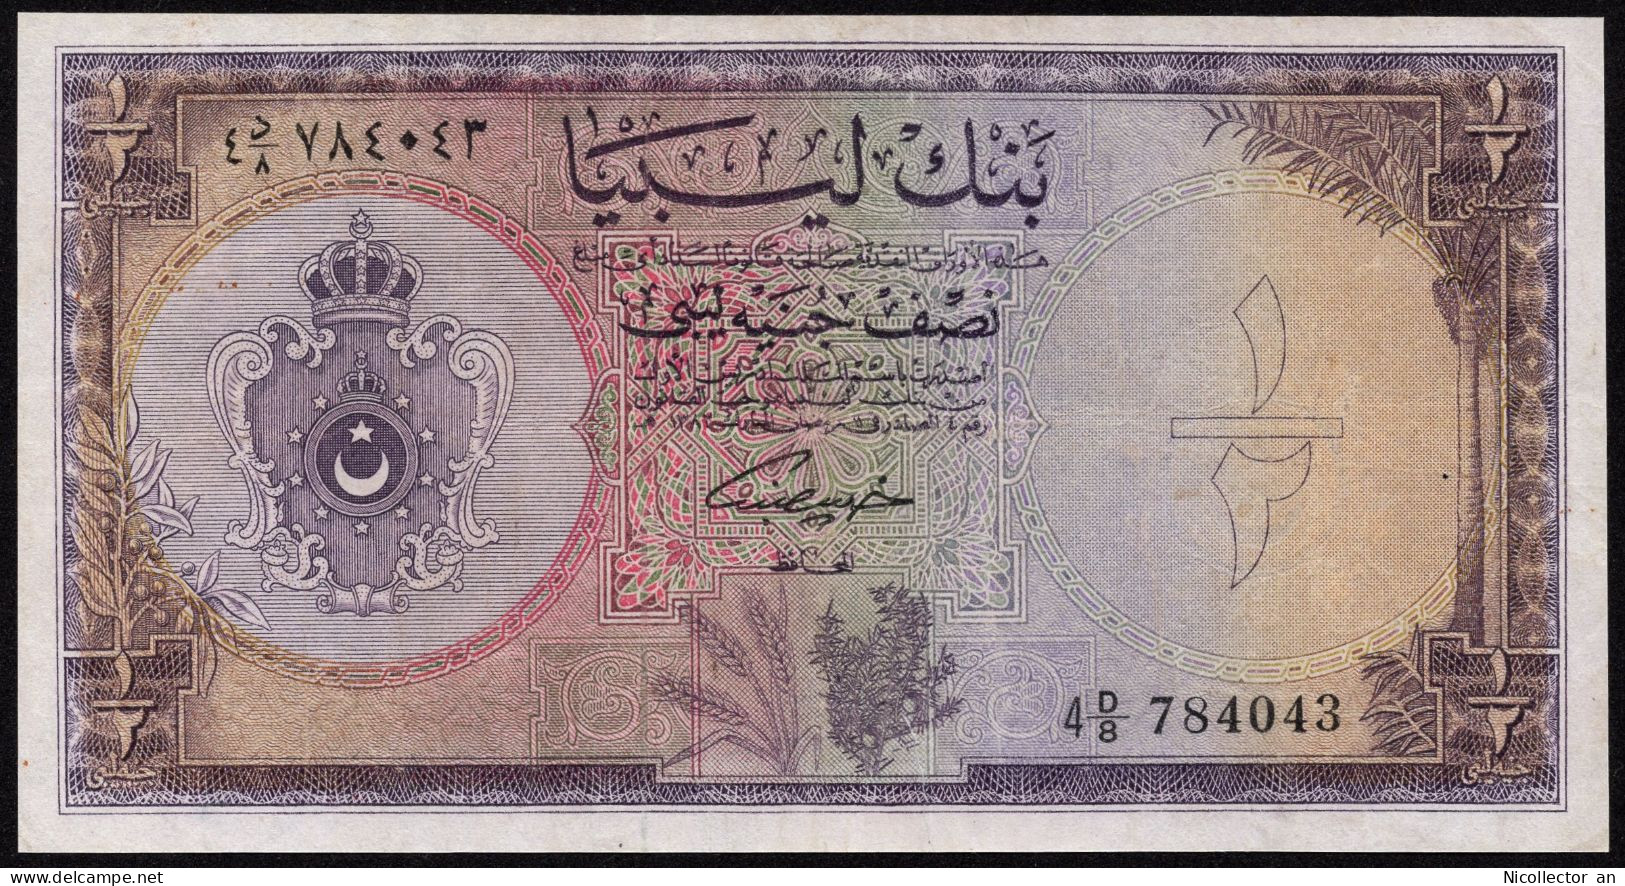 Libya 1/2 Pound 1963 P-24 King Idris *XF* Rare Banknote - Libye